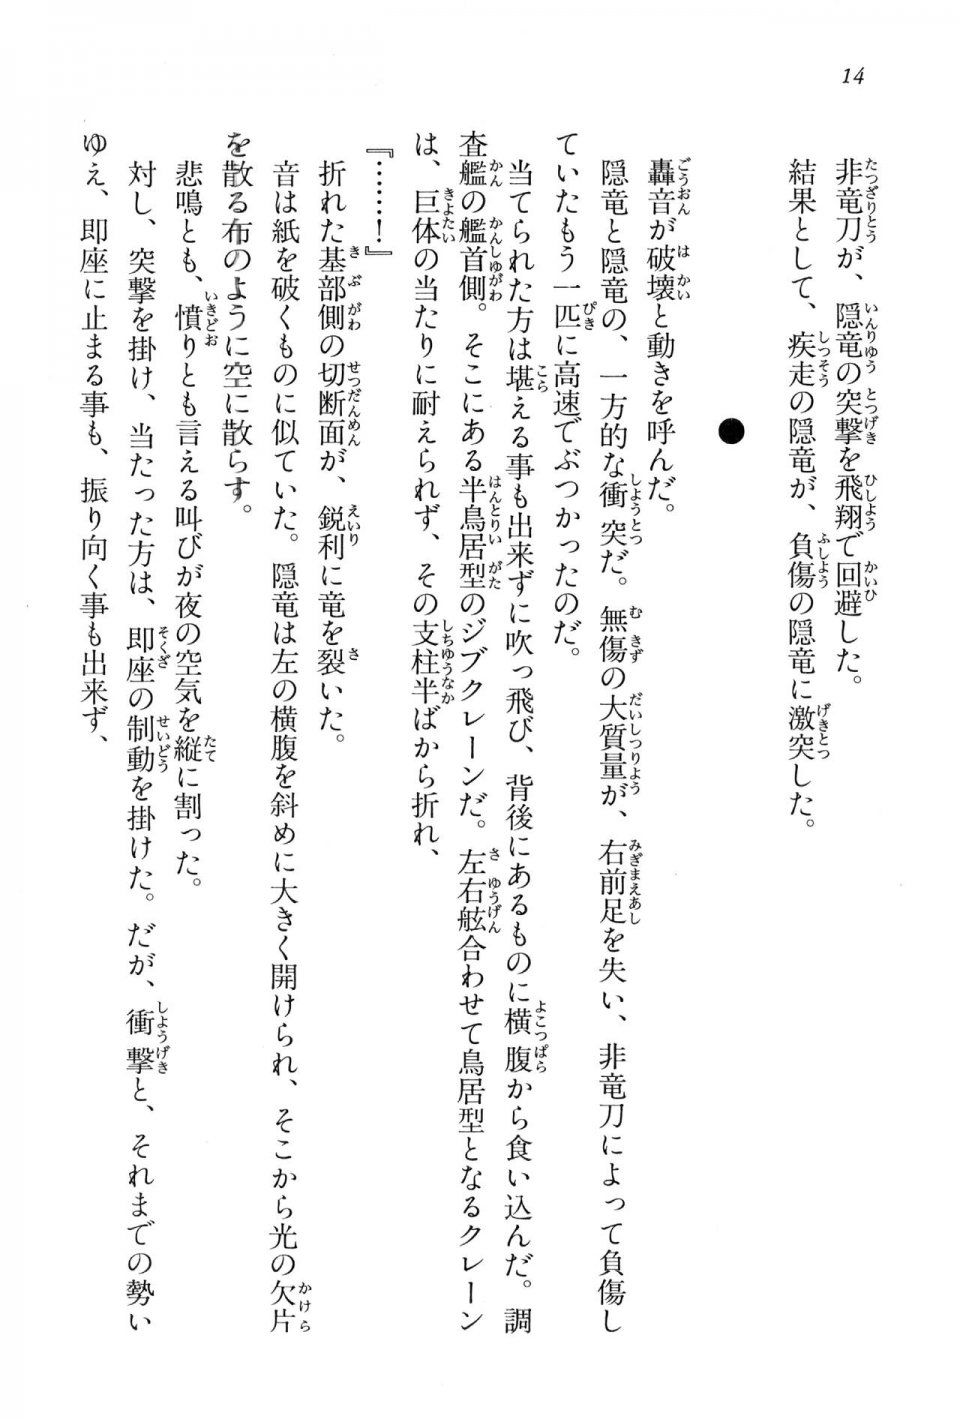 Kyoukai Senjou no Horizon BD Special Mininovel Vol 4(2B) - Photo #18